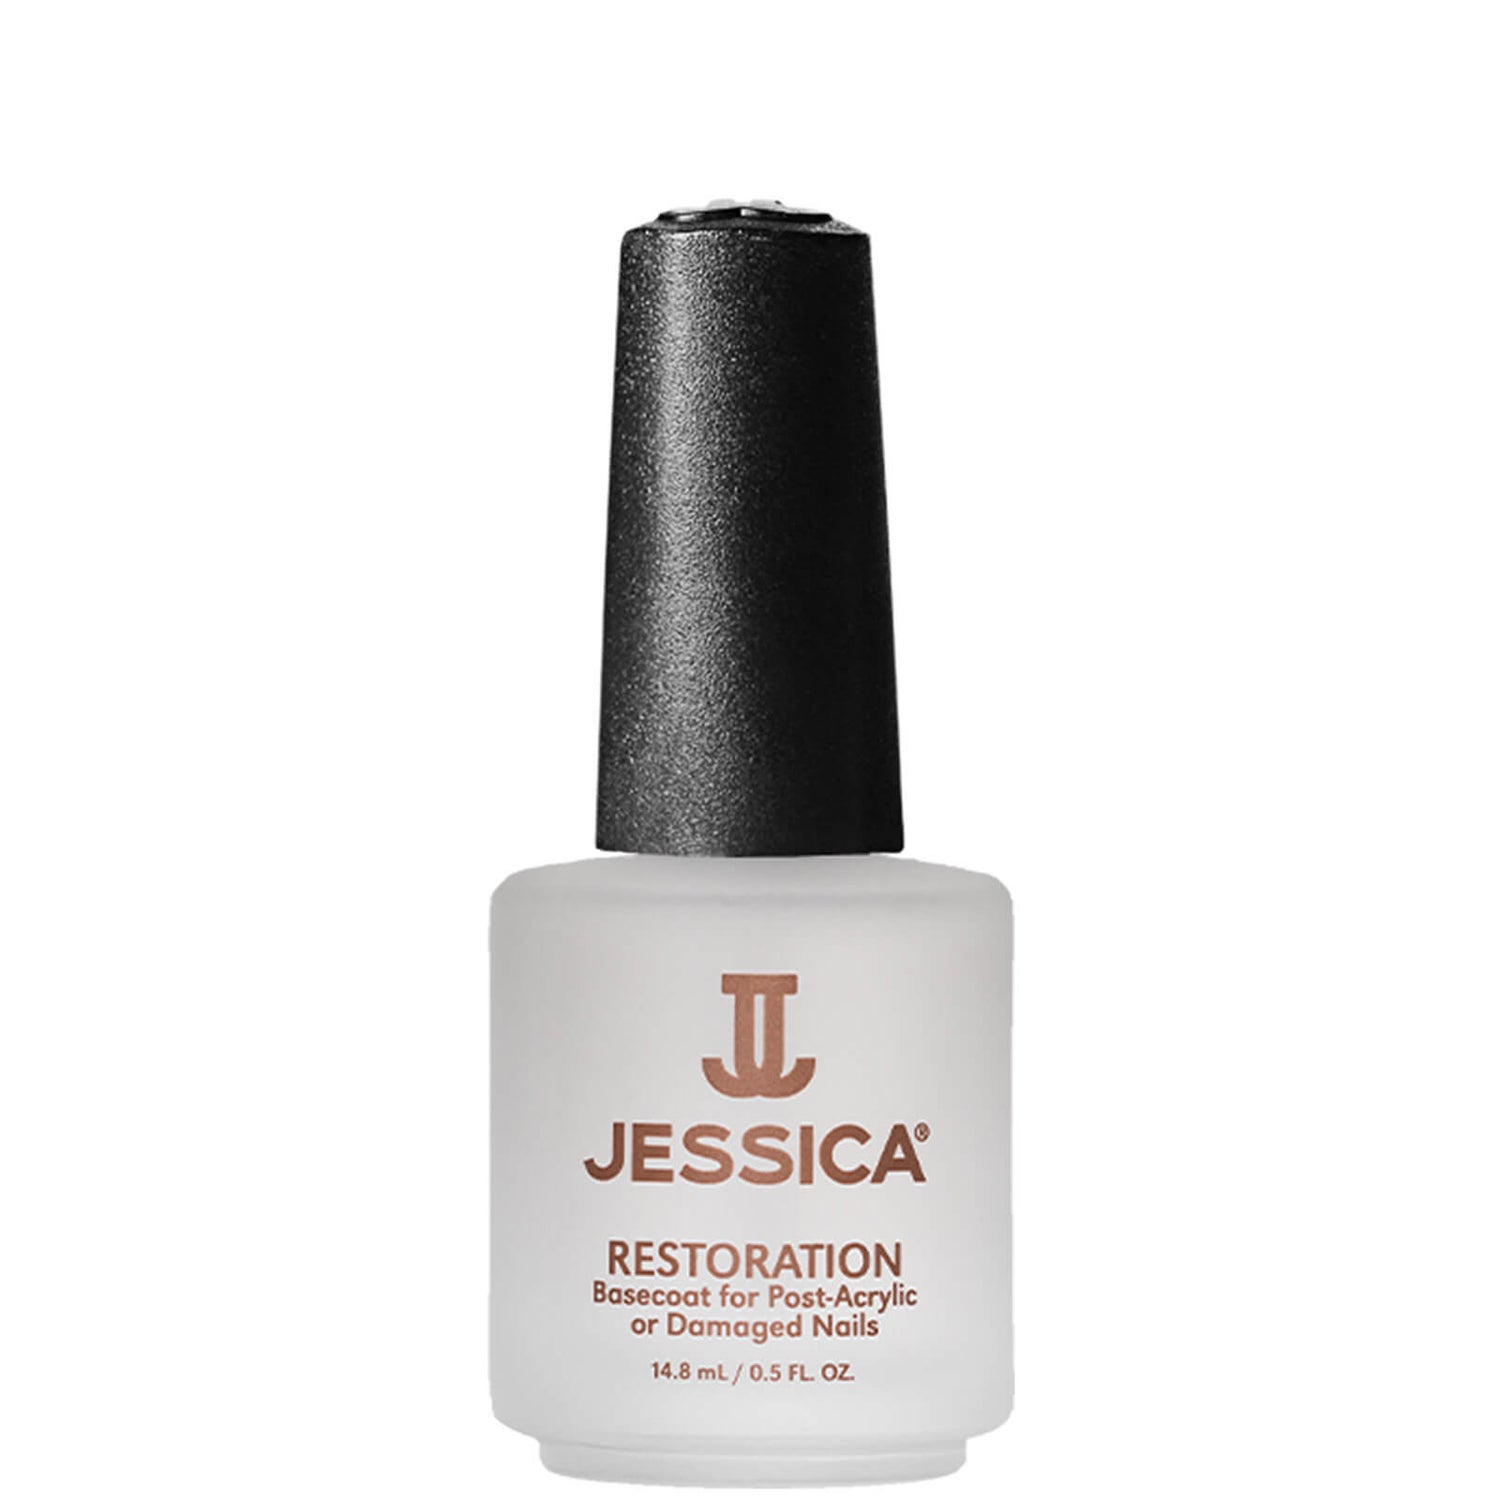 Jessica "Restoration" Basecoat für Post-Acrylic/geschädigte Nägel 14.8ml